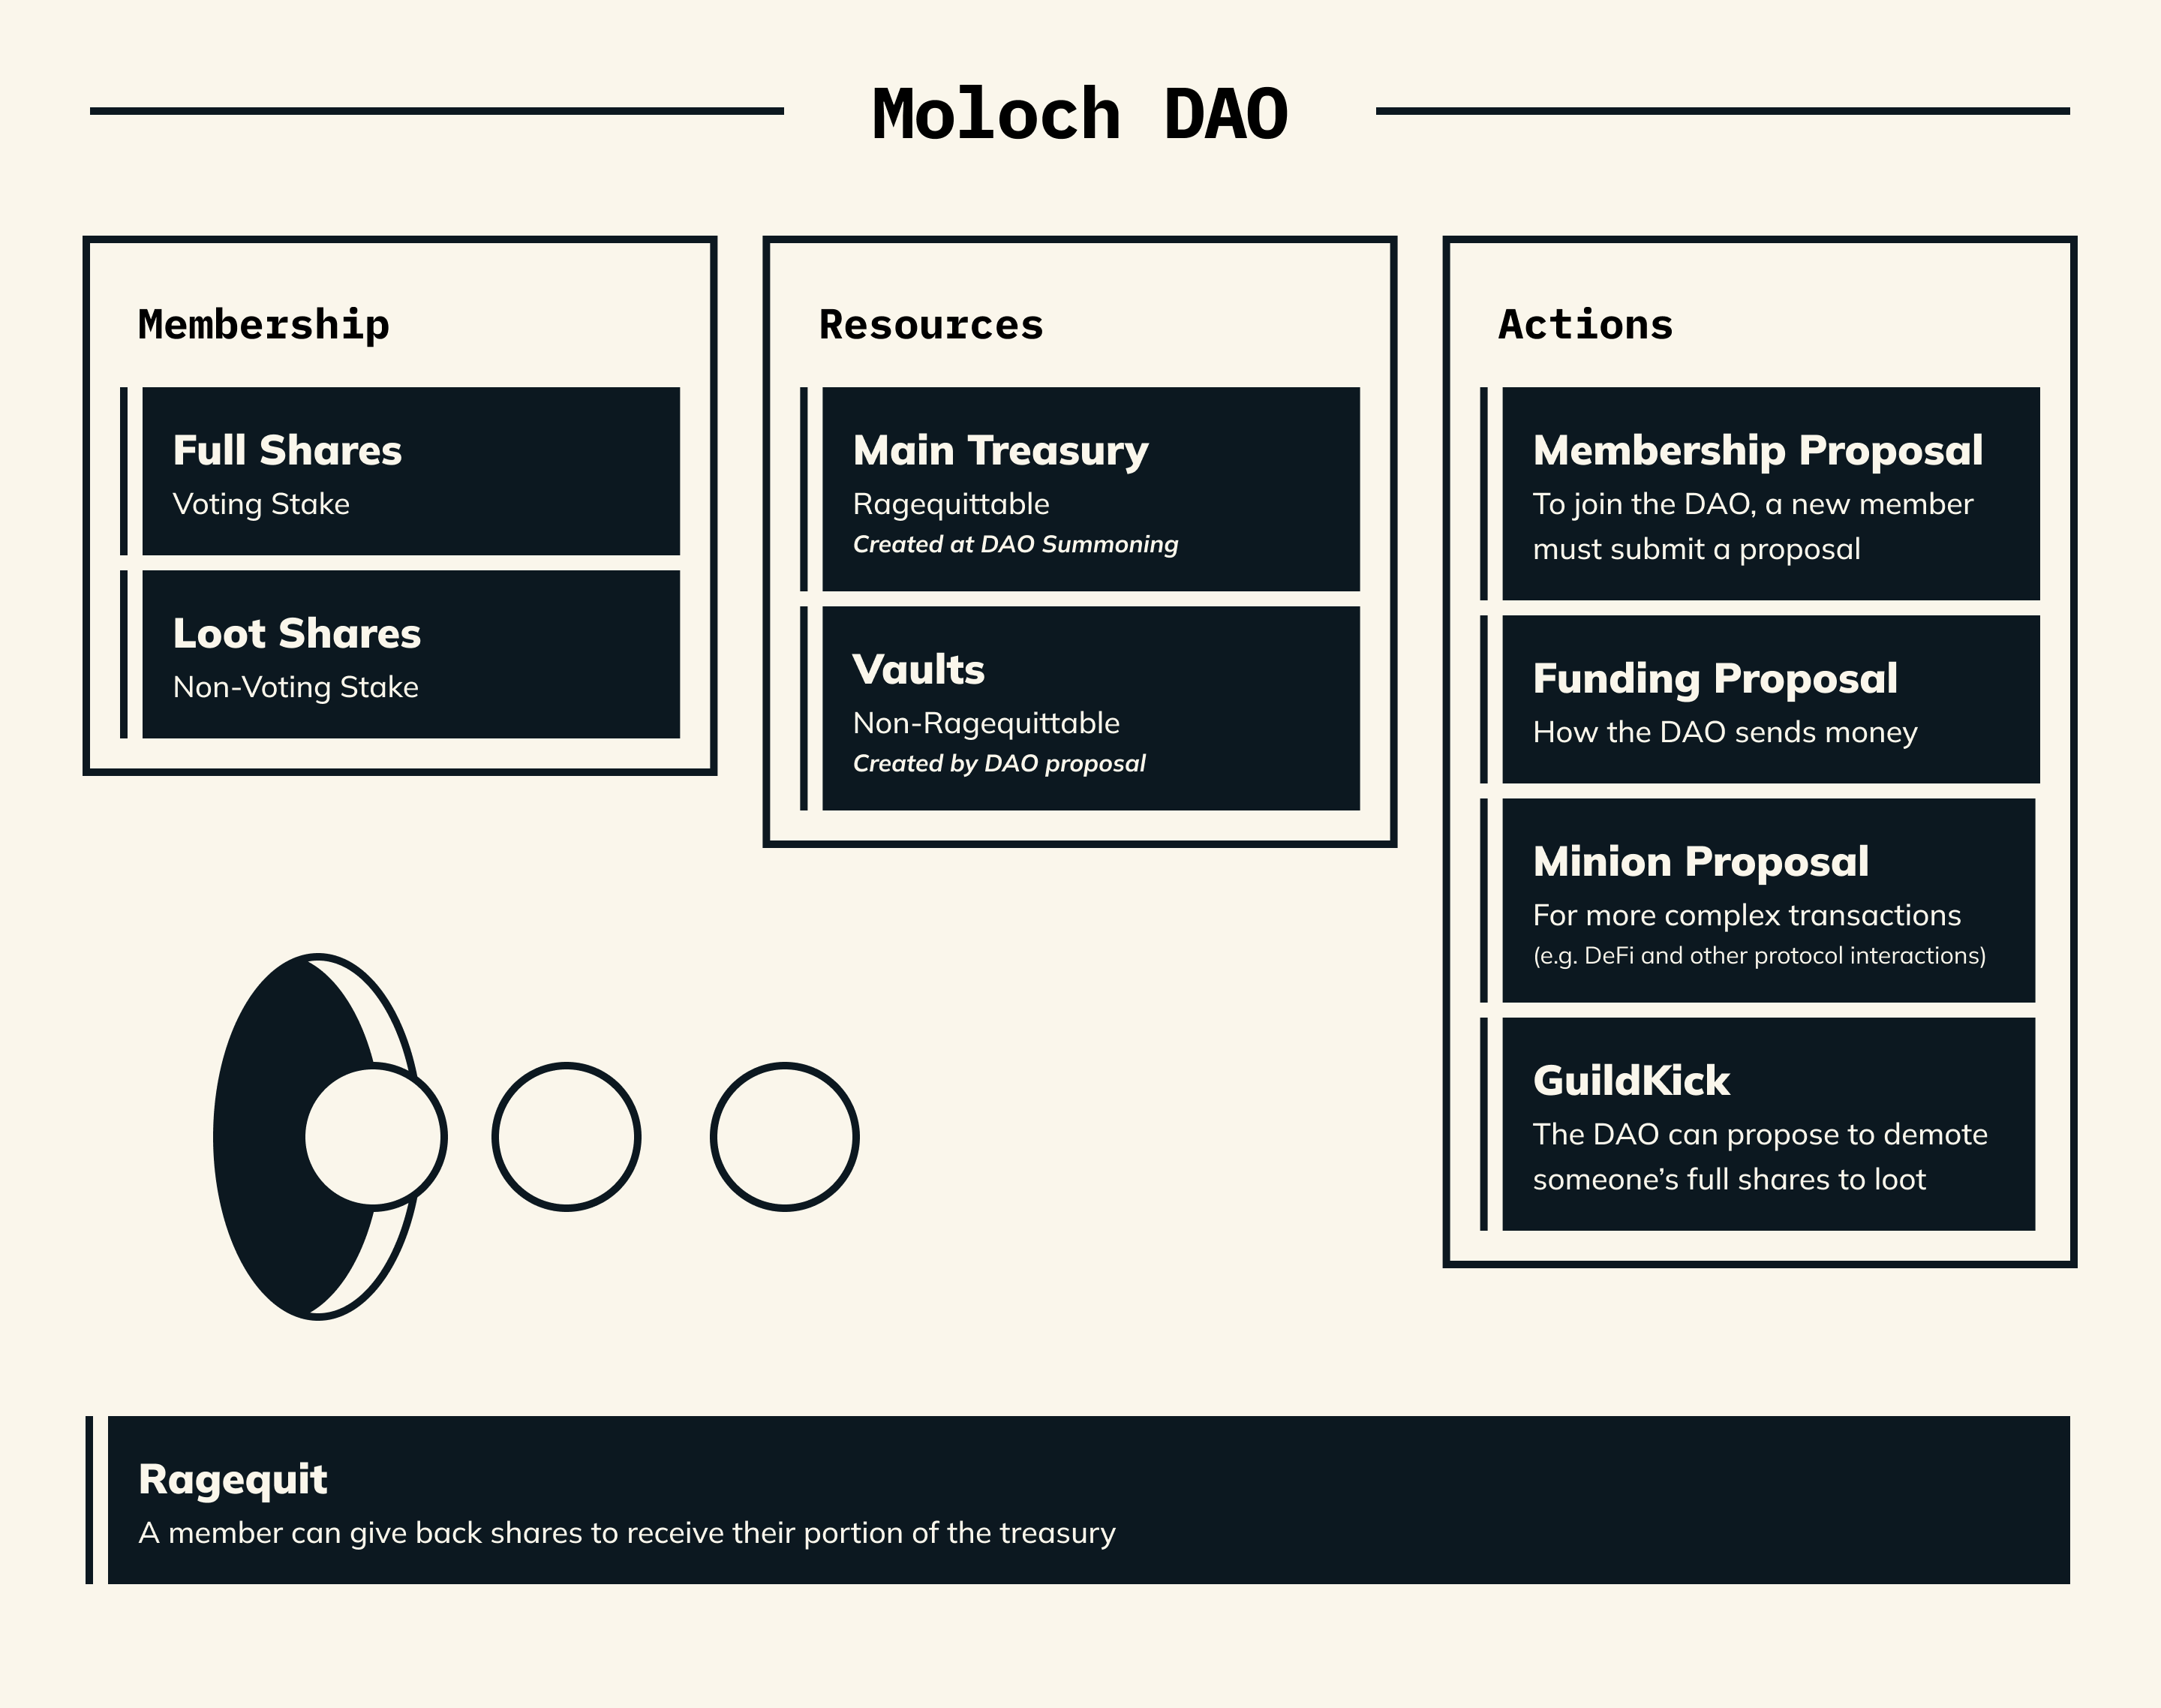 Core features of a Moloch DAO